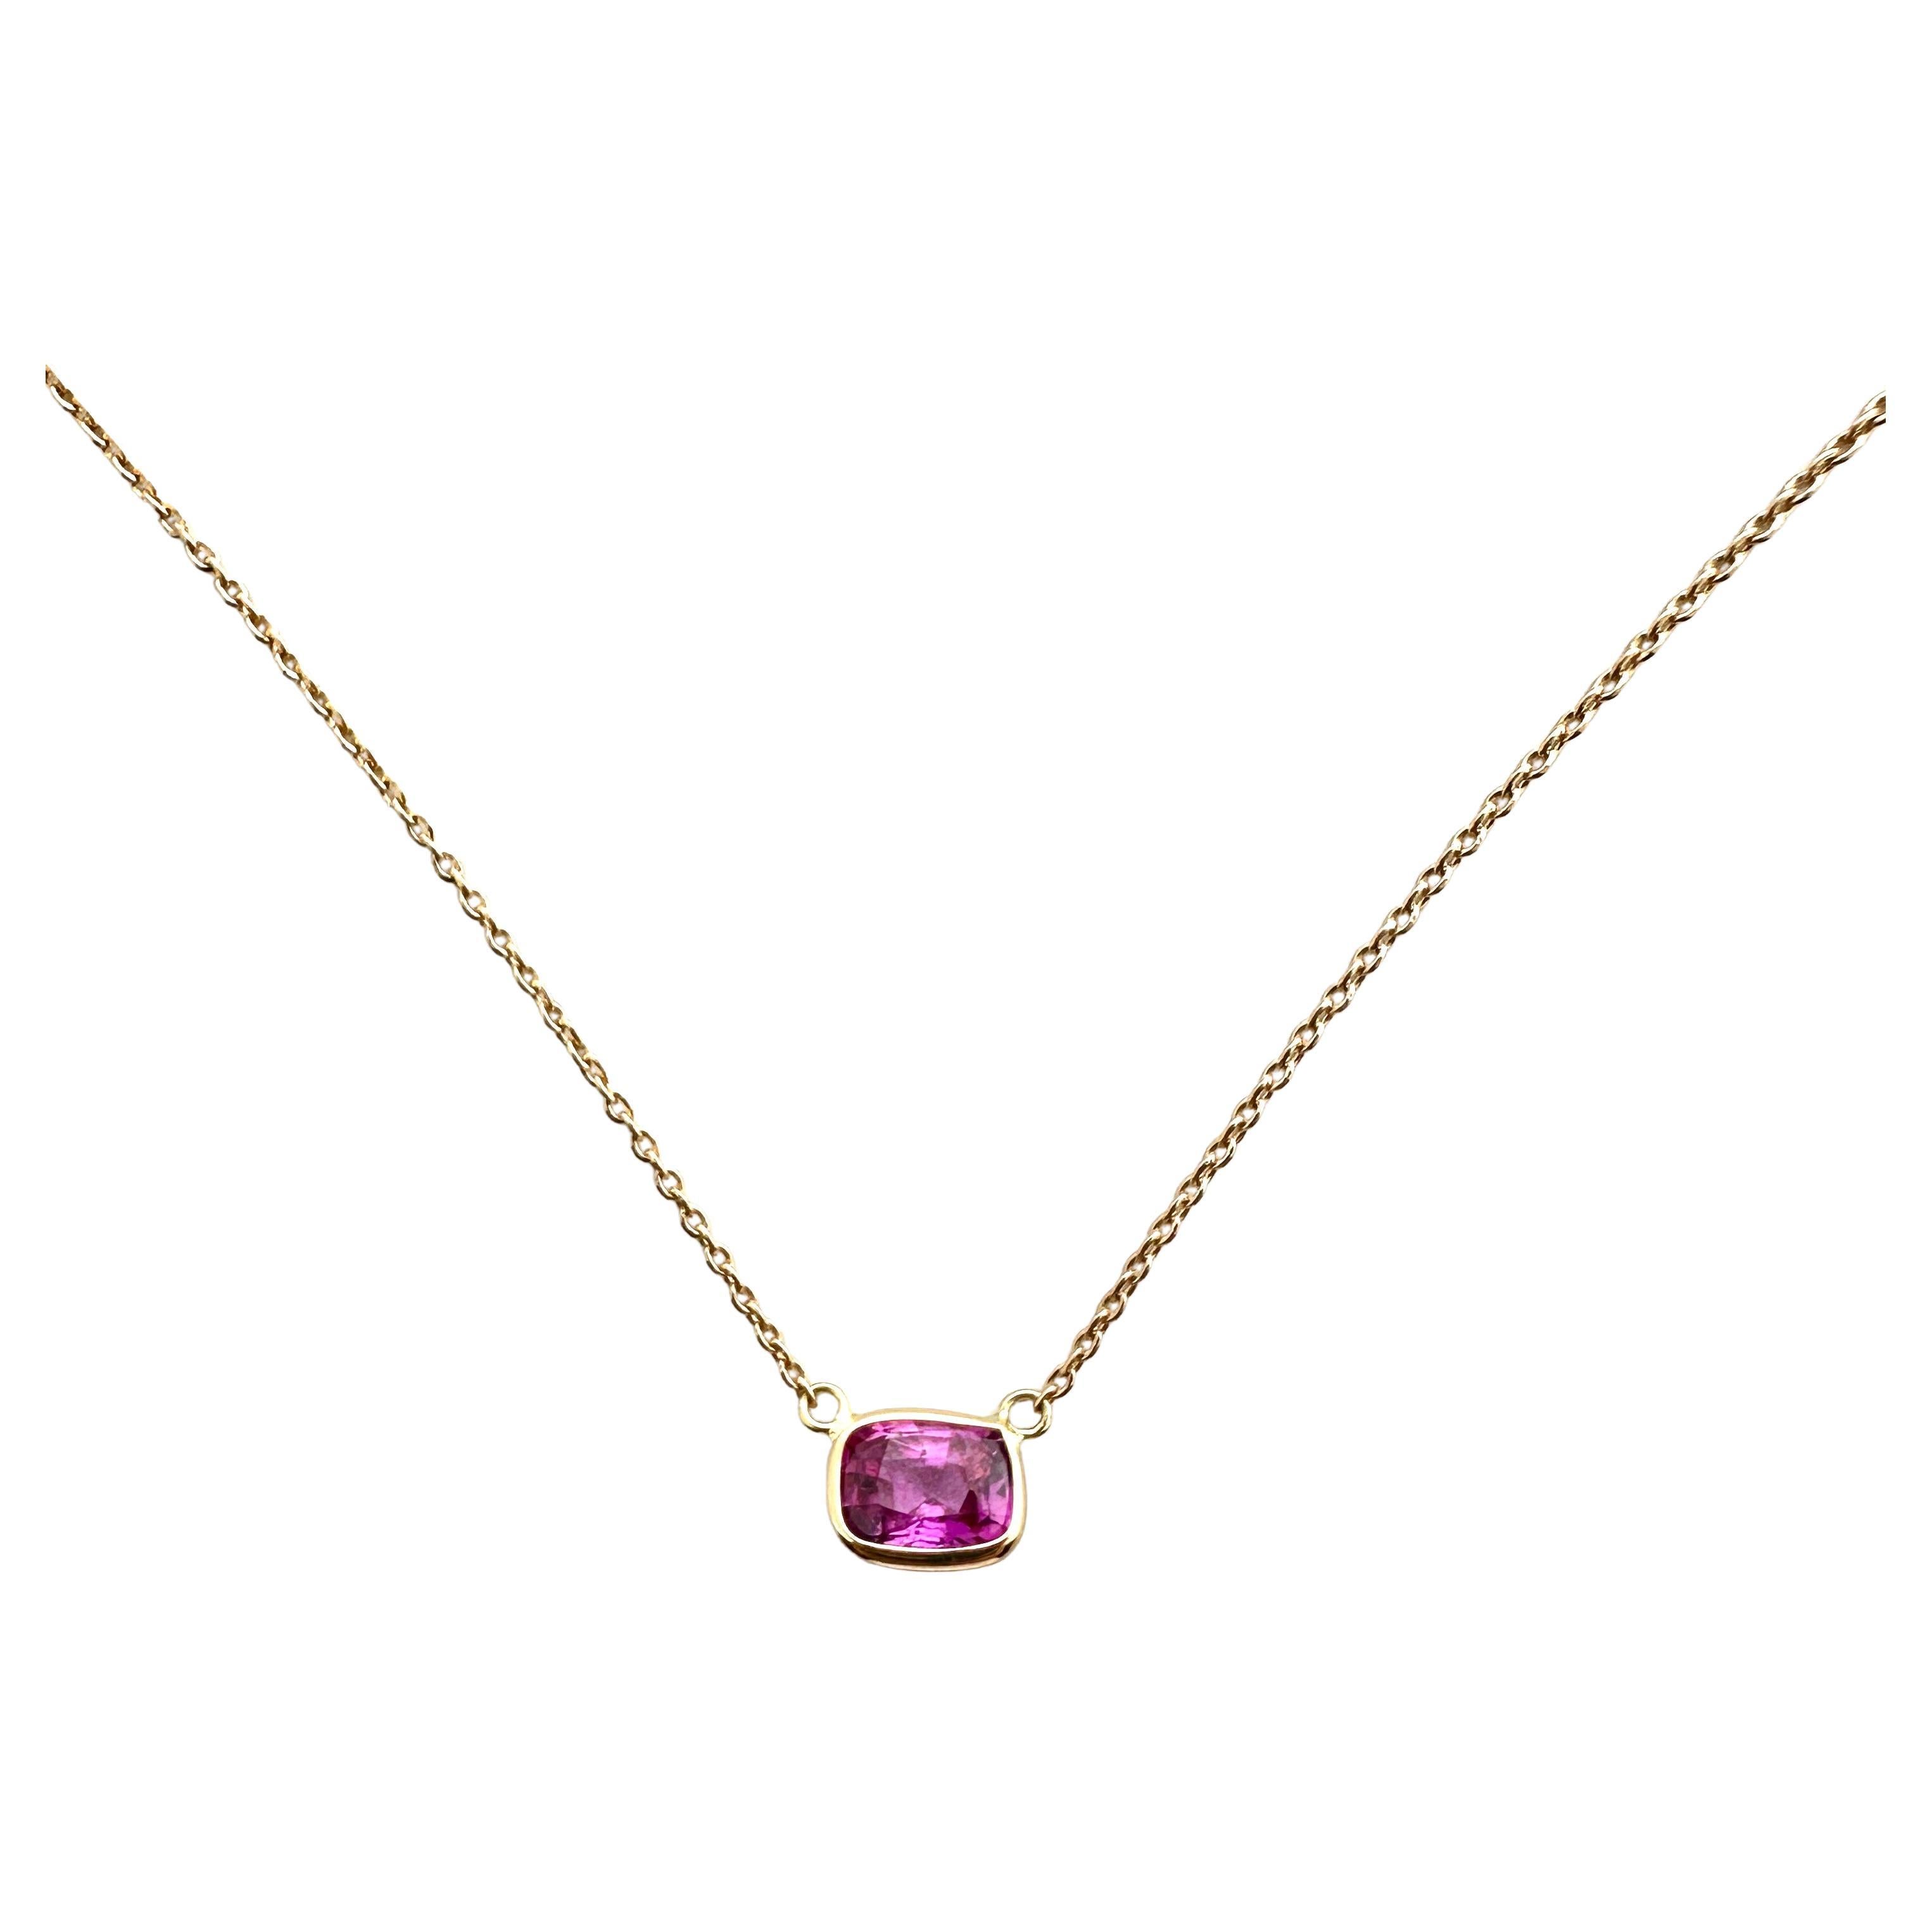 1.03 Carat Sapphire Pink Cushion &Fashion Necklaces Berberyn Certified In 14K RG